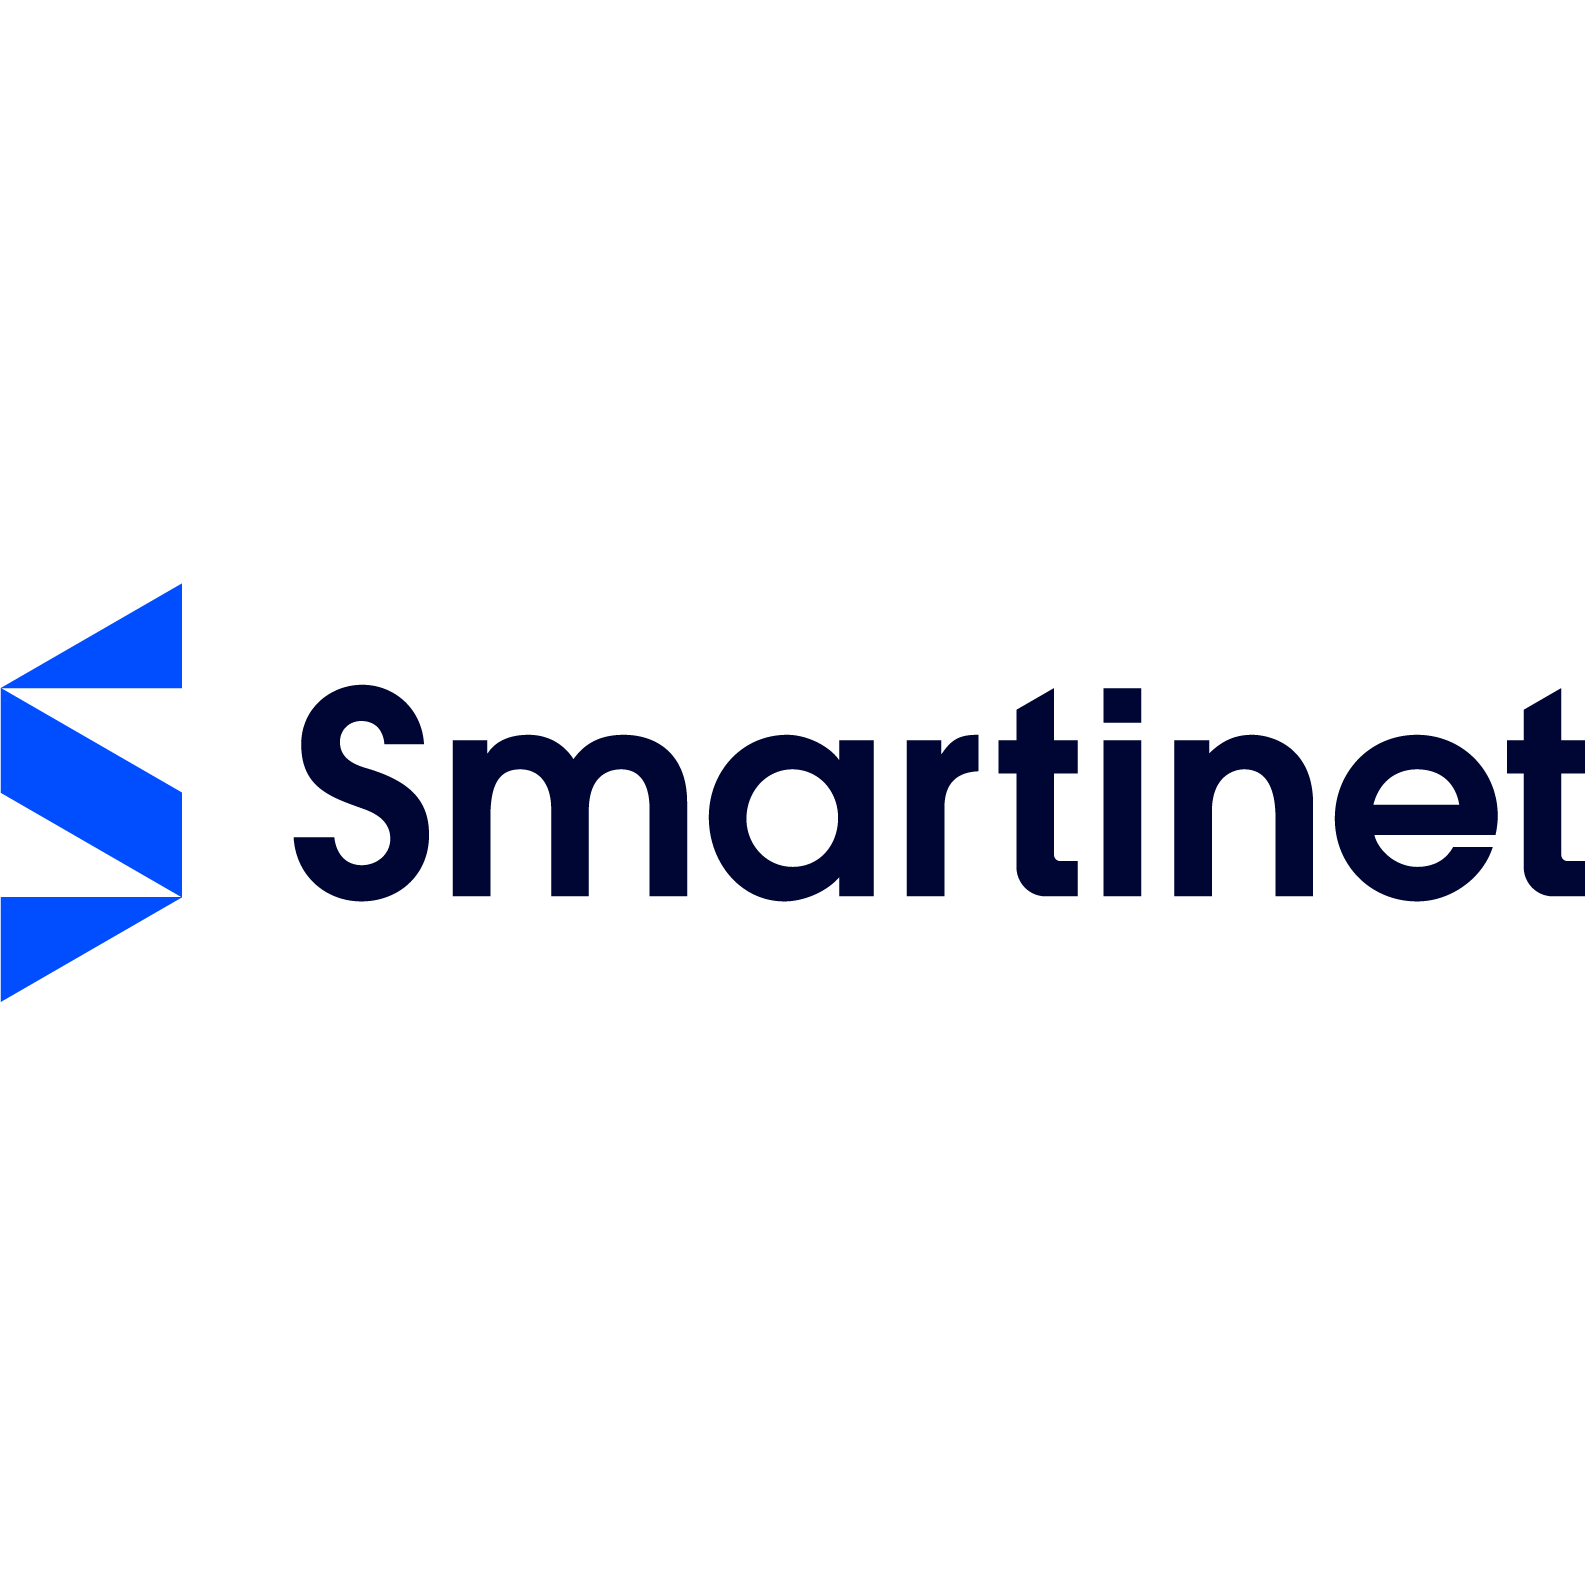 Smartinet logo